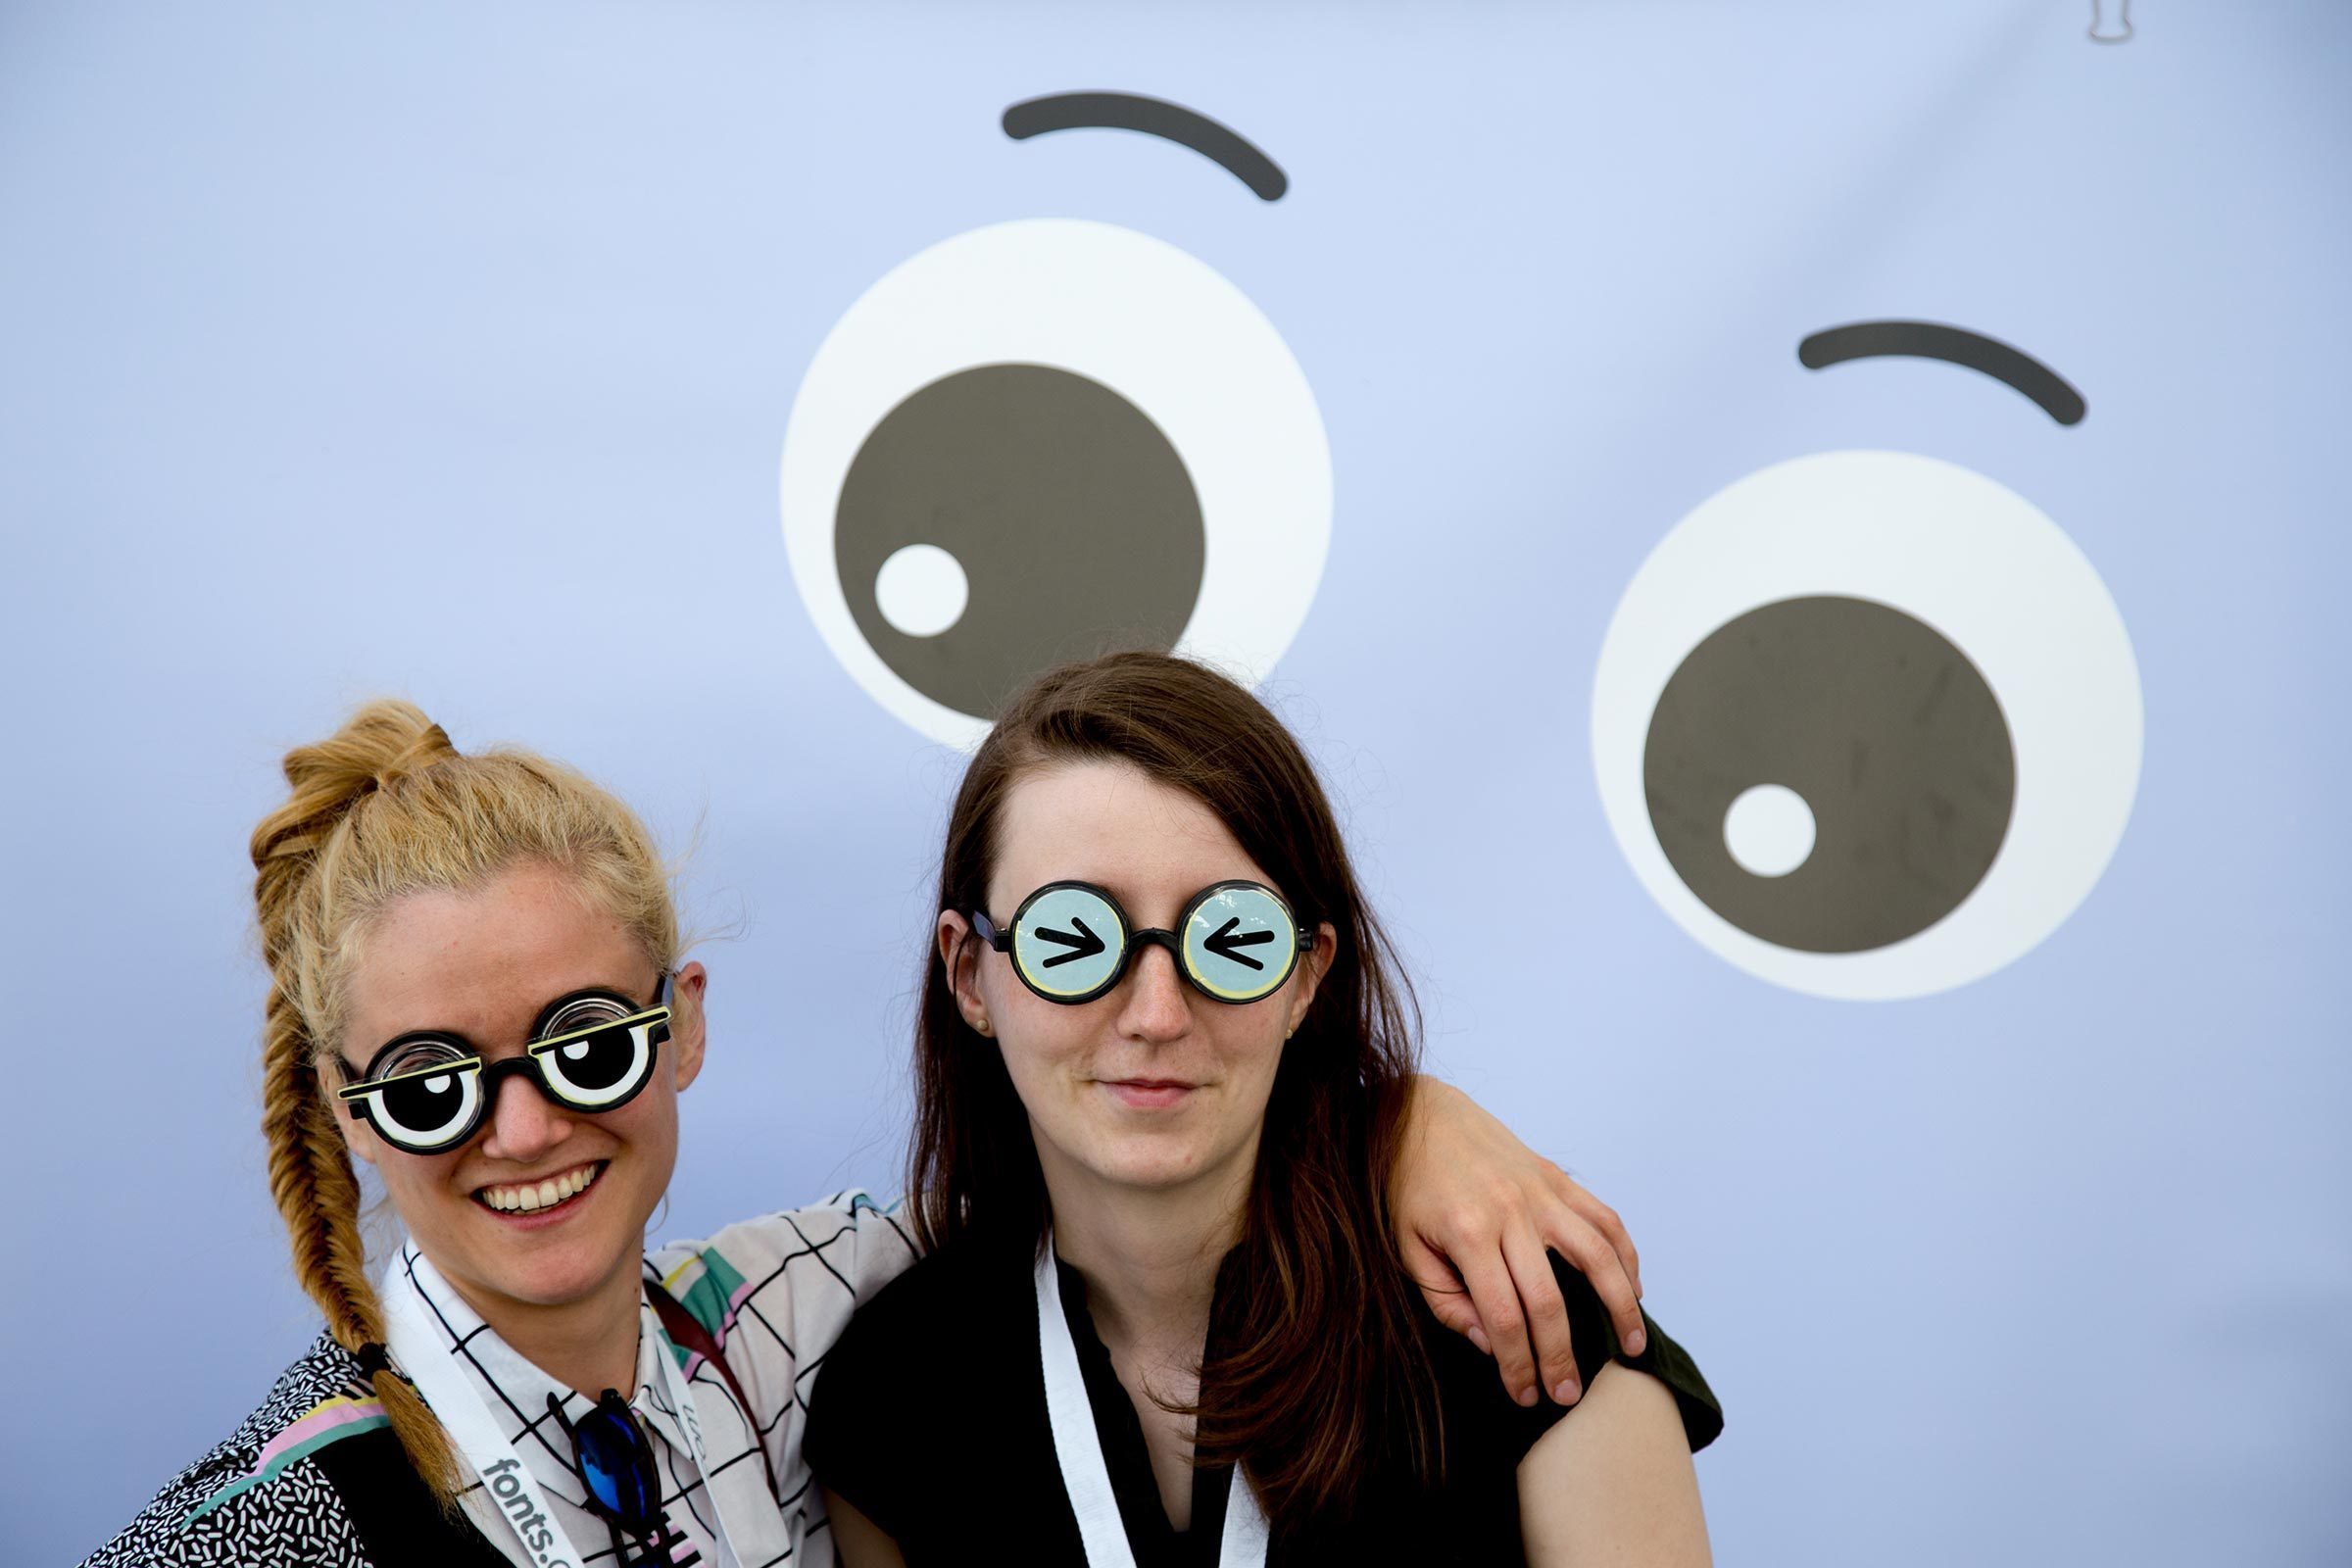 Ana and Jana from the Berlin office sample the goofy eyeglass table.